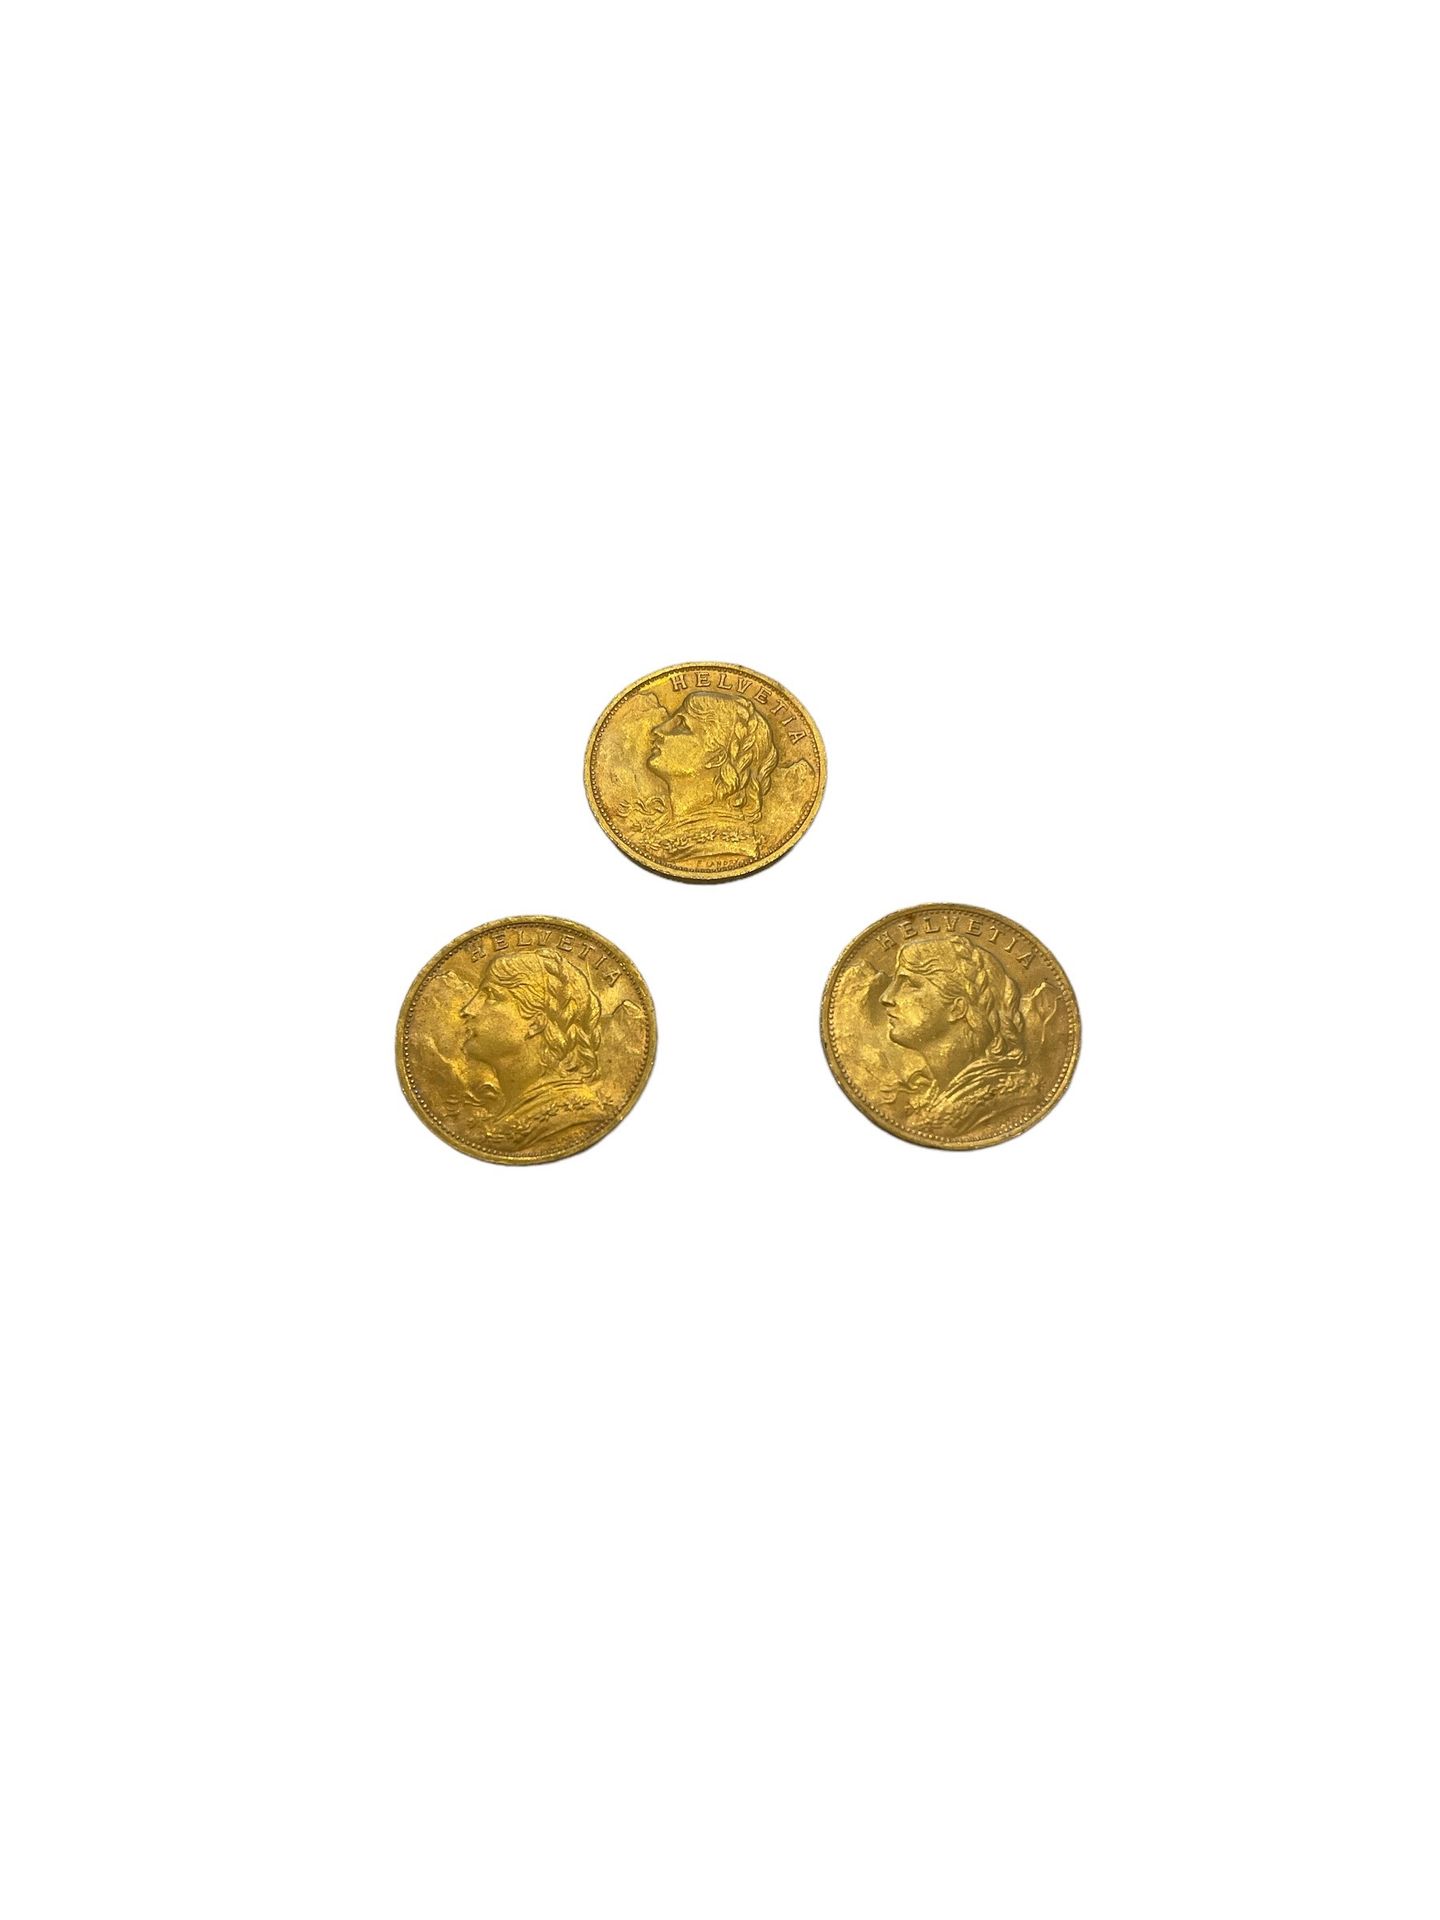 Null SVIZZERA
3 monete da 20 franchi oro
Peso: 19,3 g